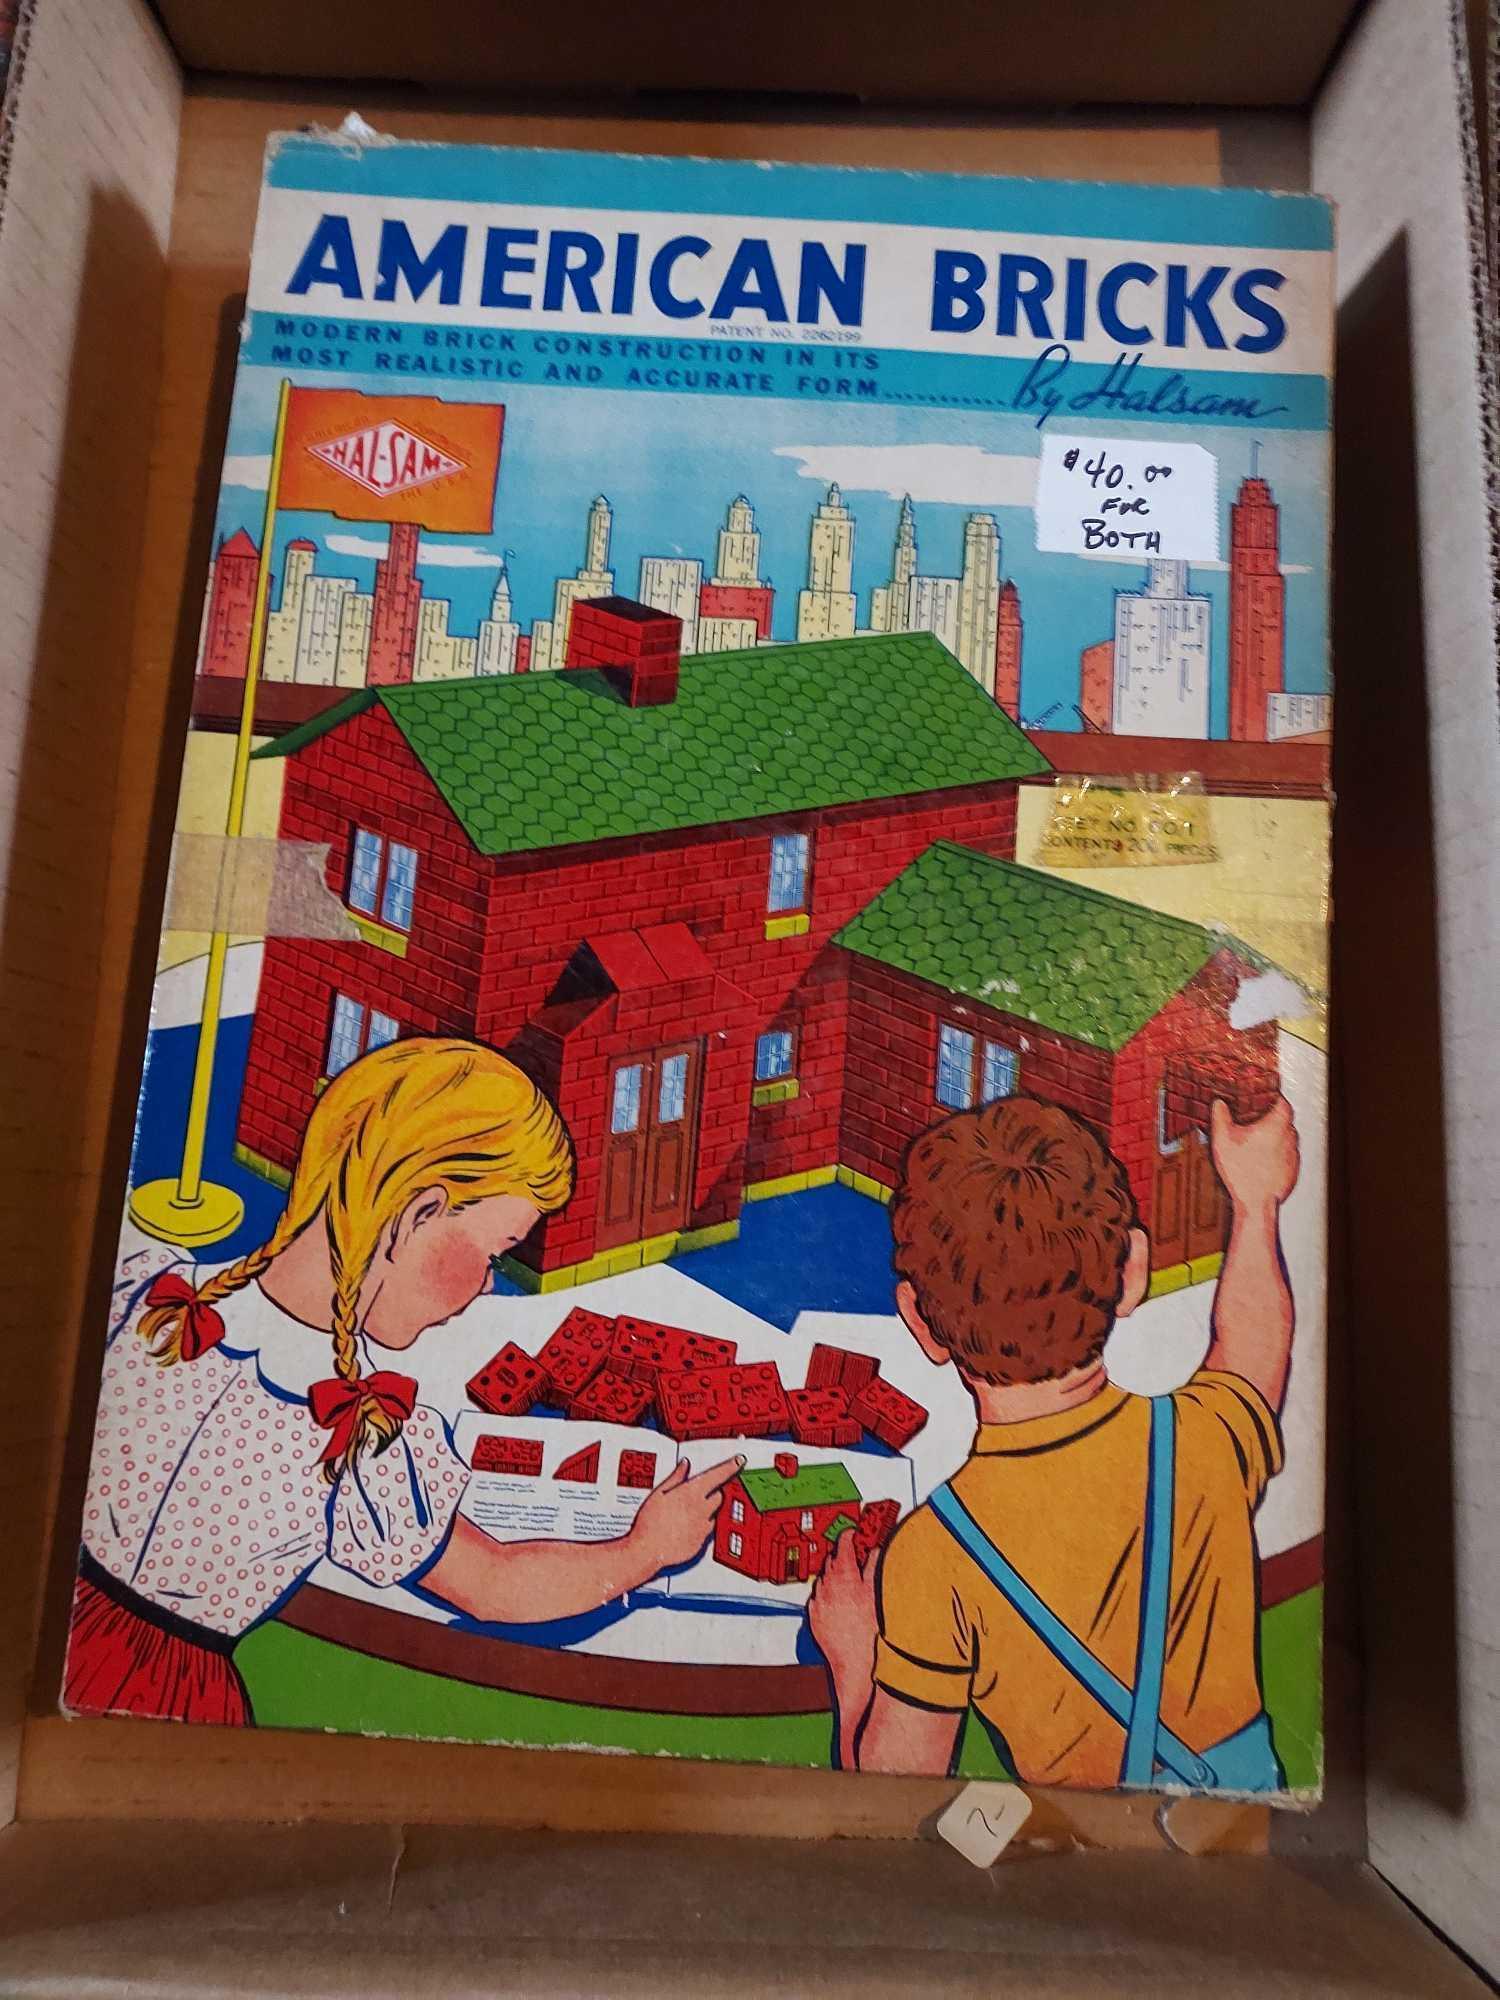 Halsam American Bricks Sets, Friction Army Tank, & Other Vintage Toys